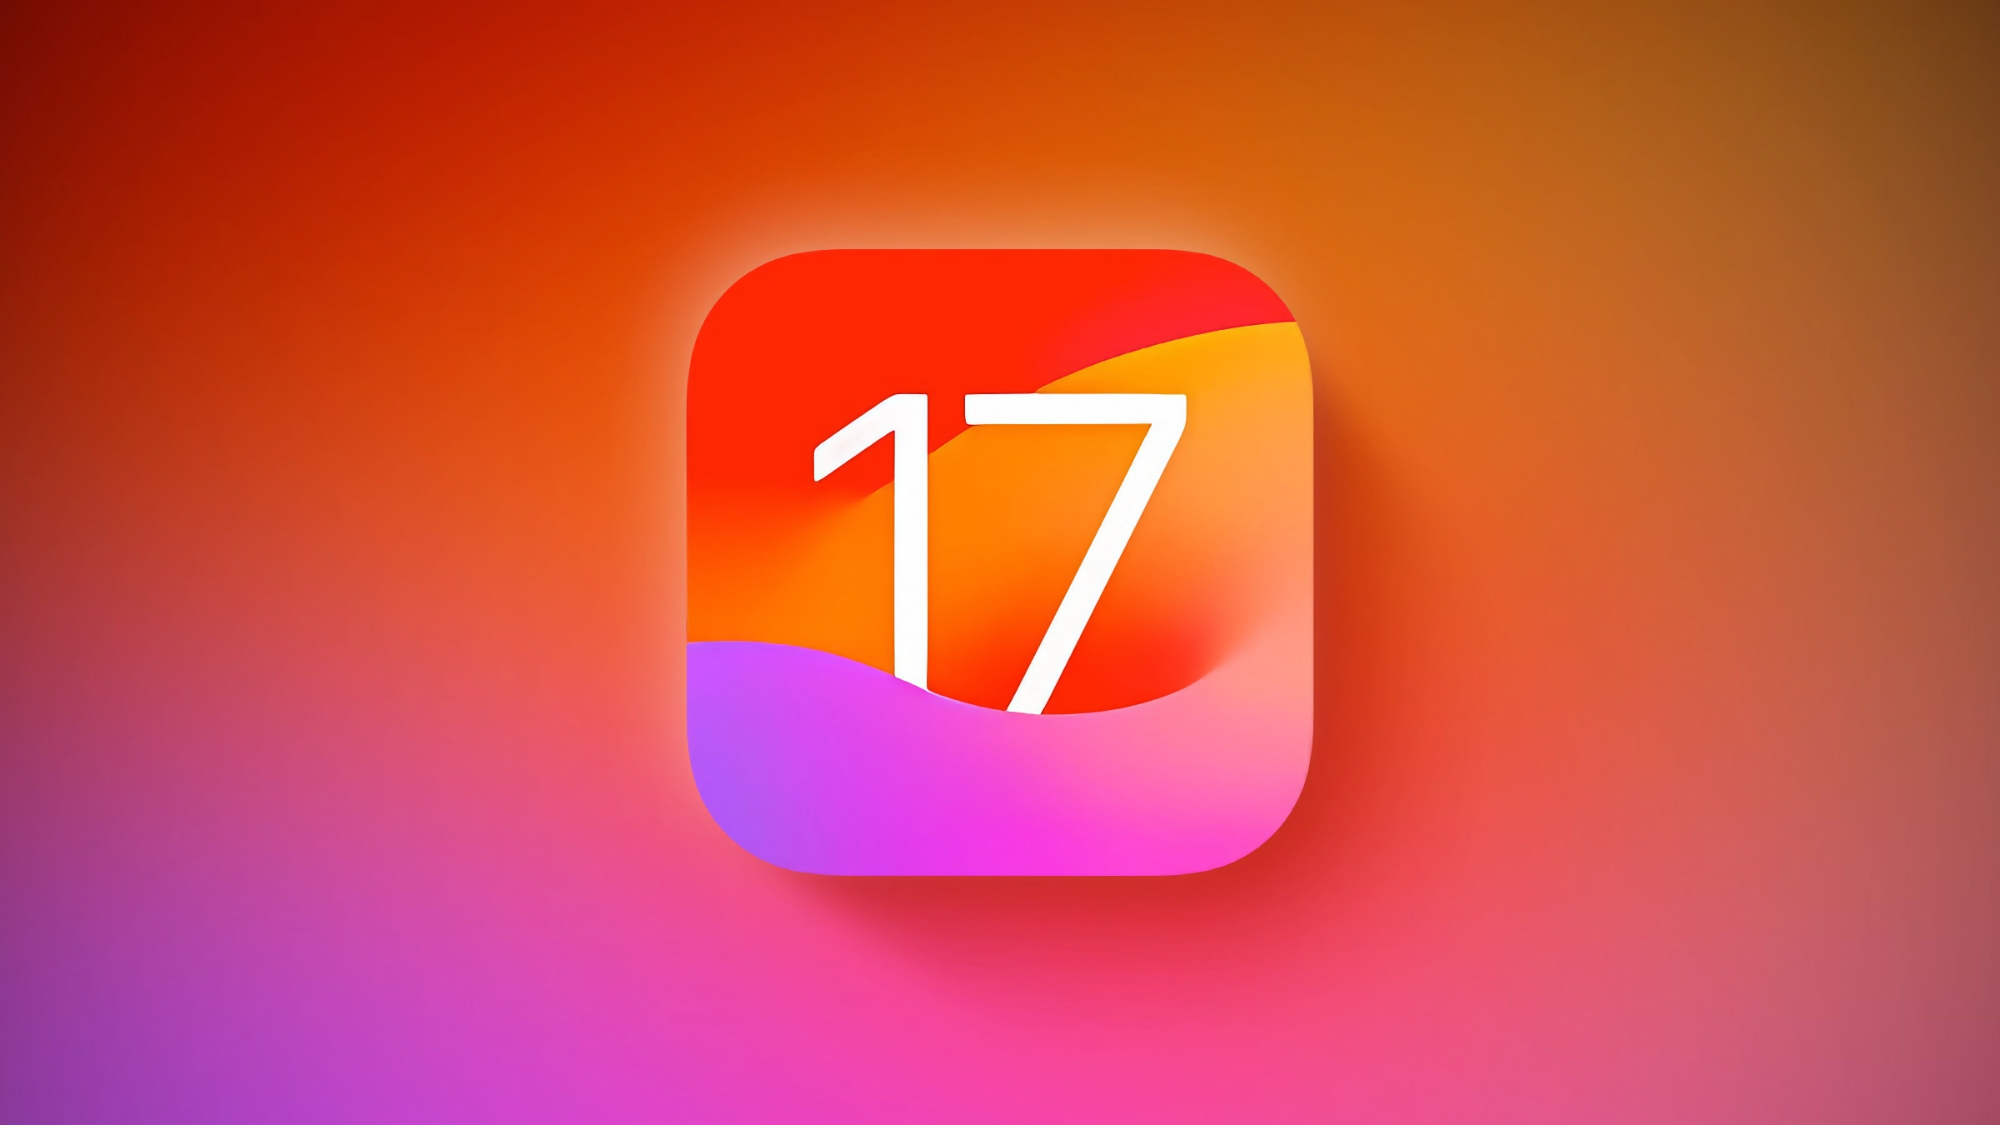 Apple is preparing iOS 17.2.1 update for iPhone users